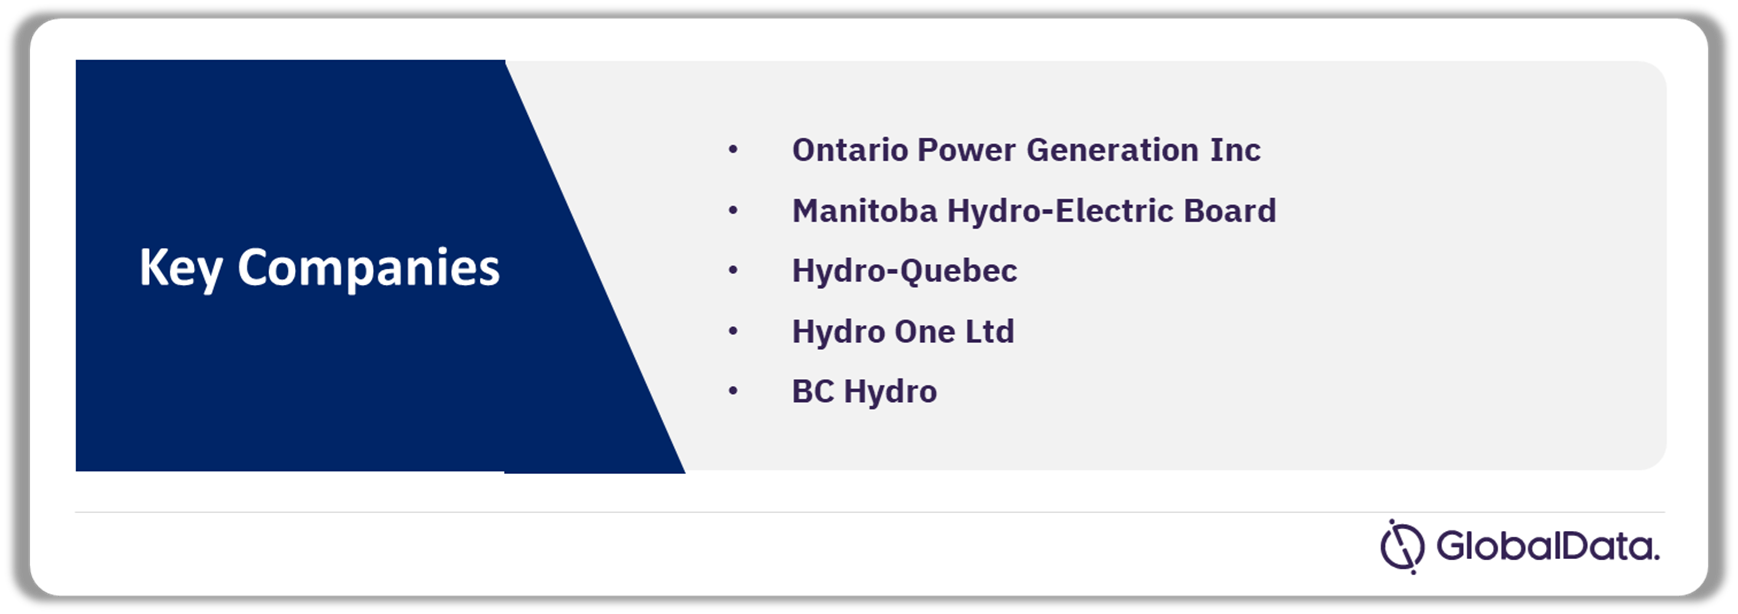 Canada Hydropower Market Analysis by Companies